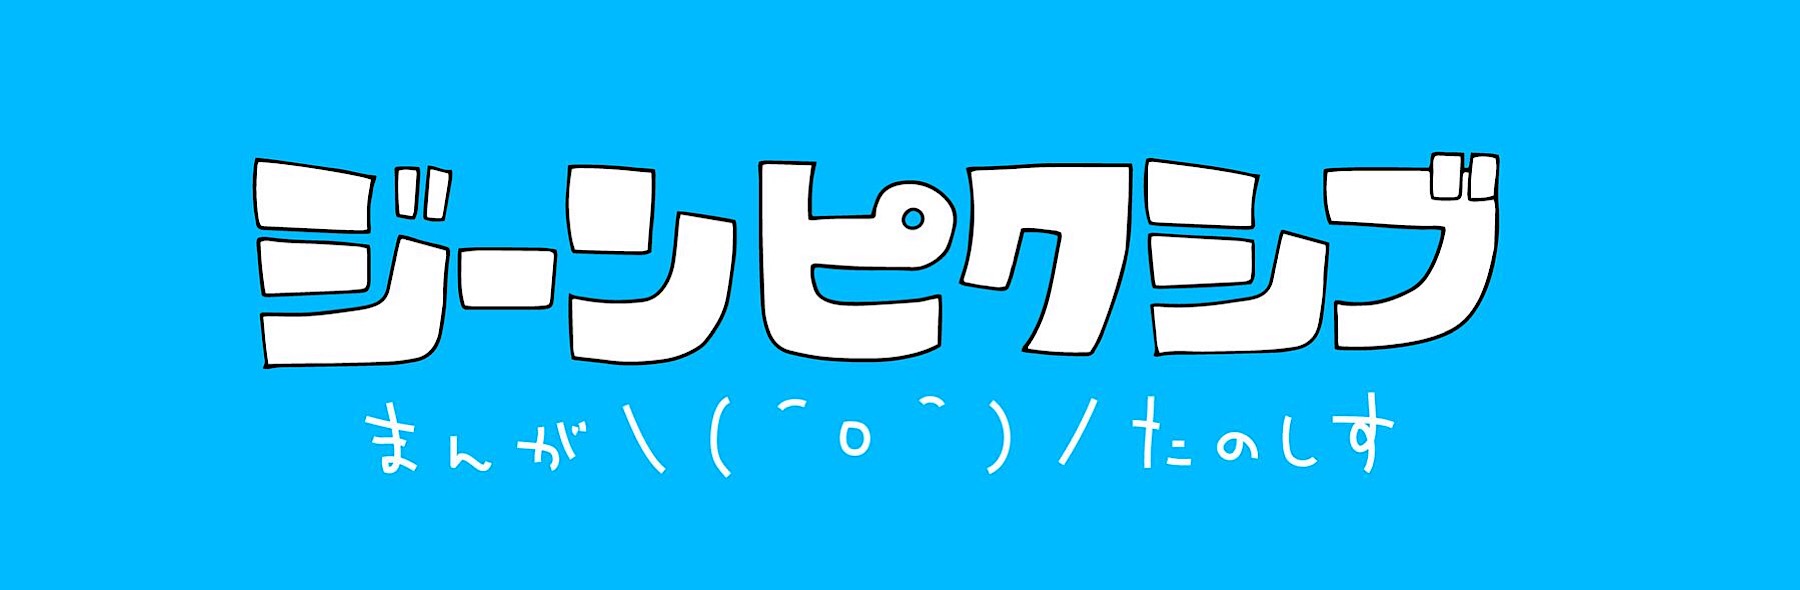 Osora's Naka no Hito Genome [Jikkyōchū] Manga Gets Anime - News